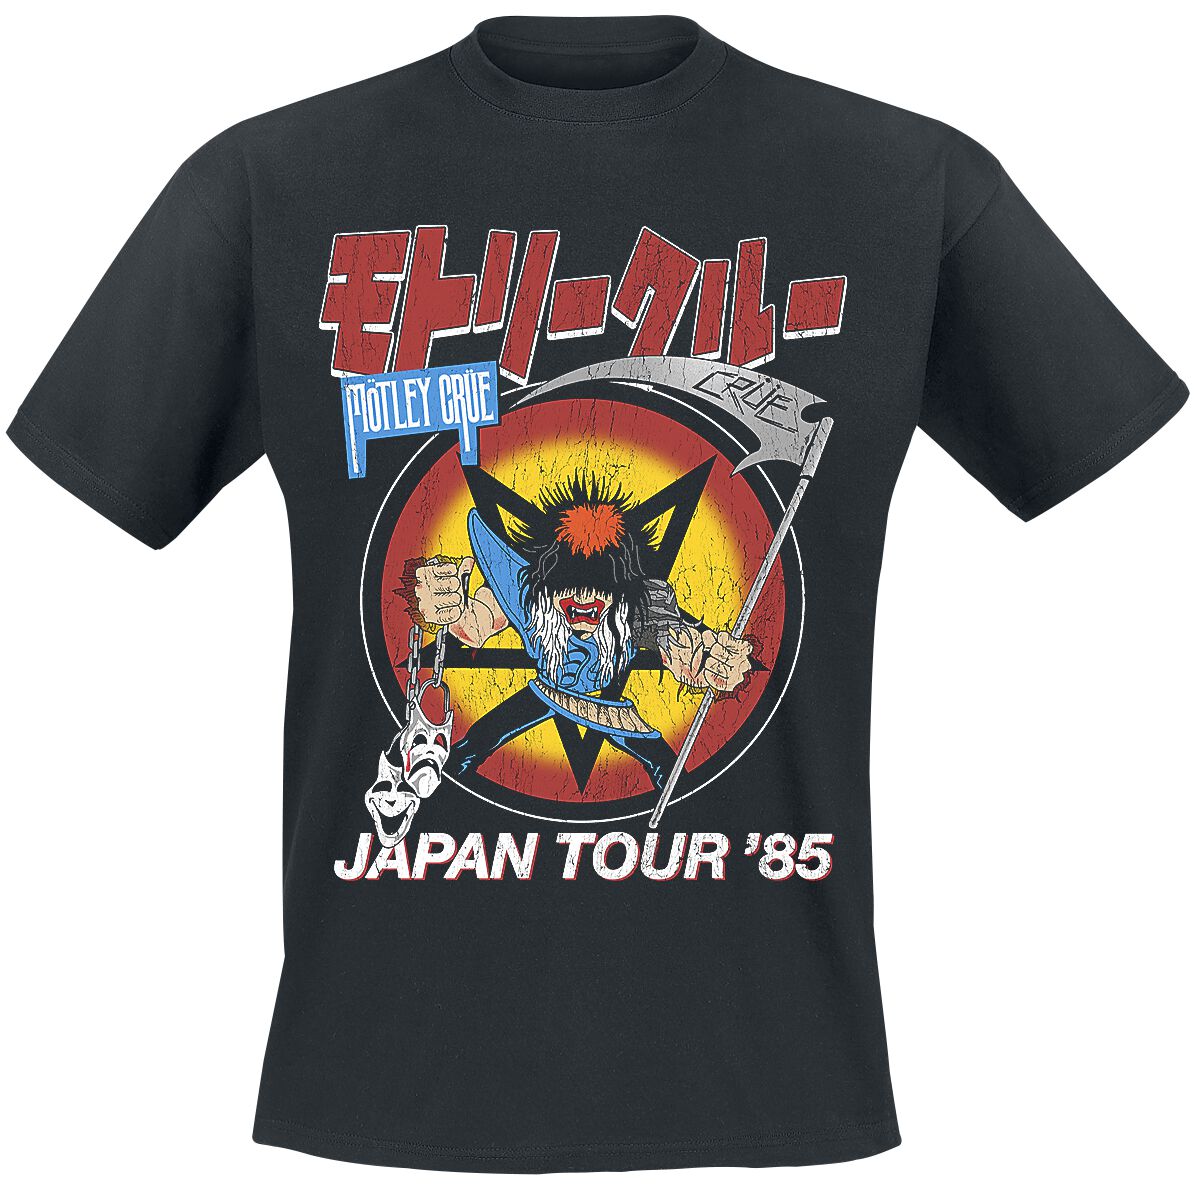 Mötley Crüe Japan Tour T-Shirt schwarz in S